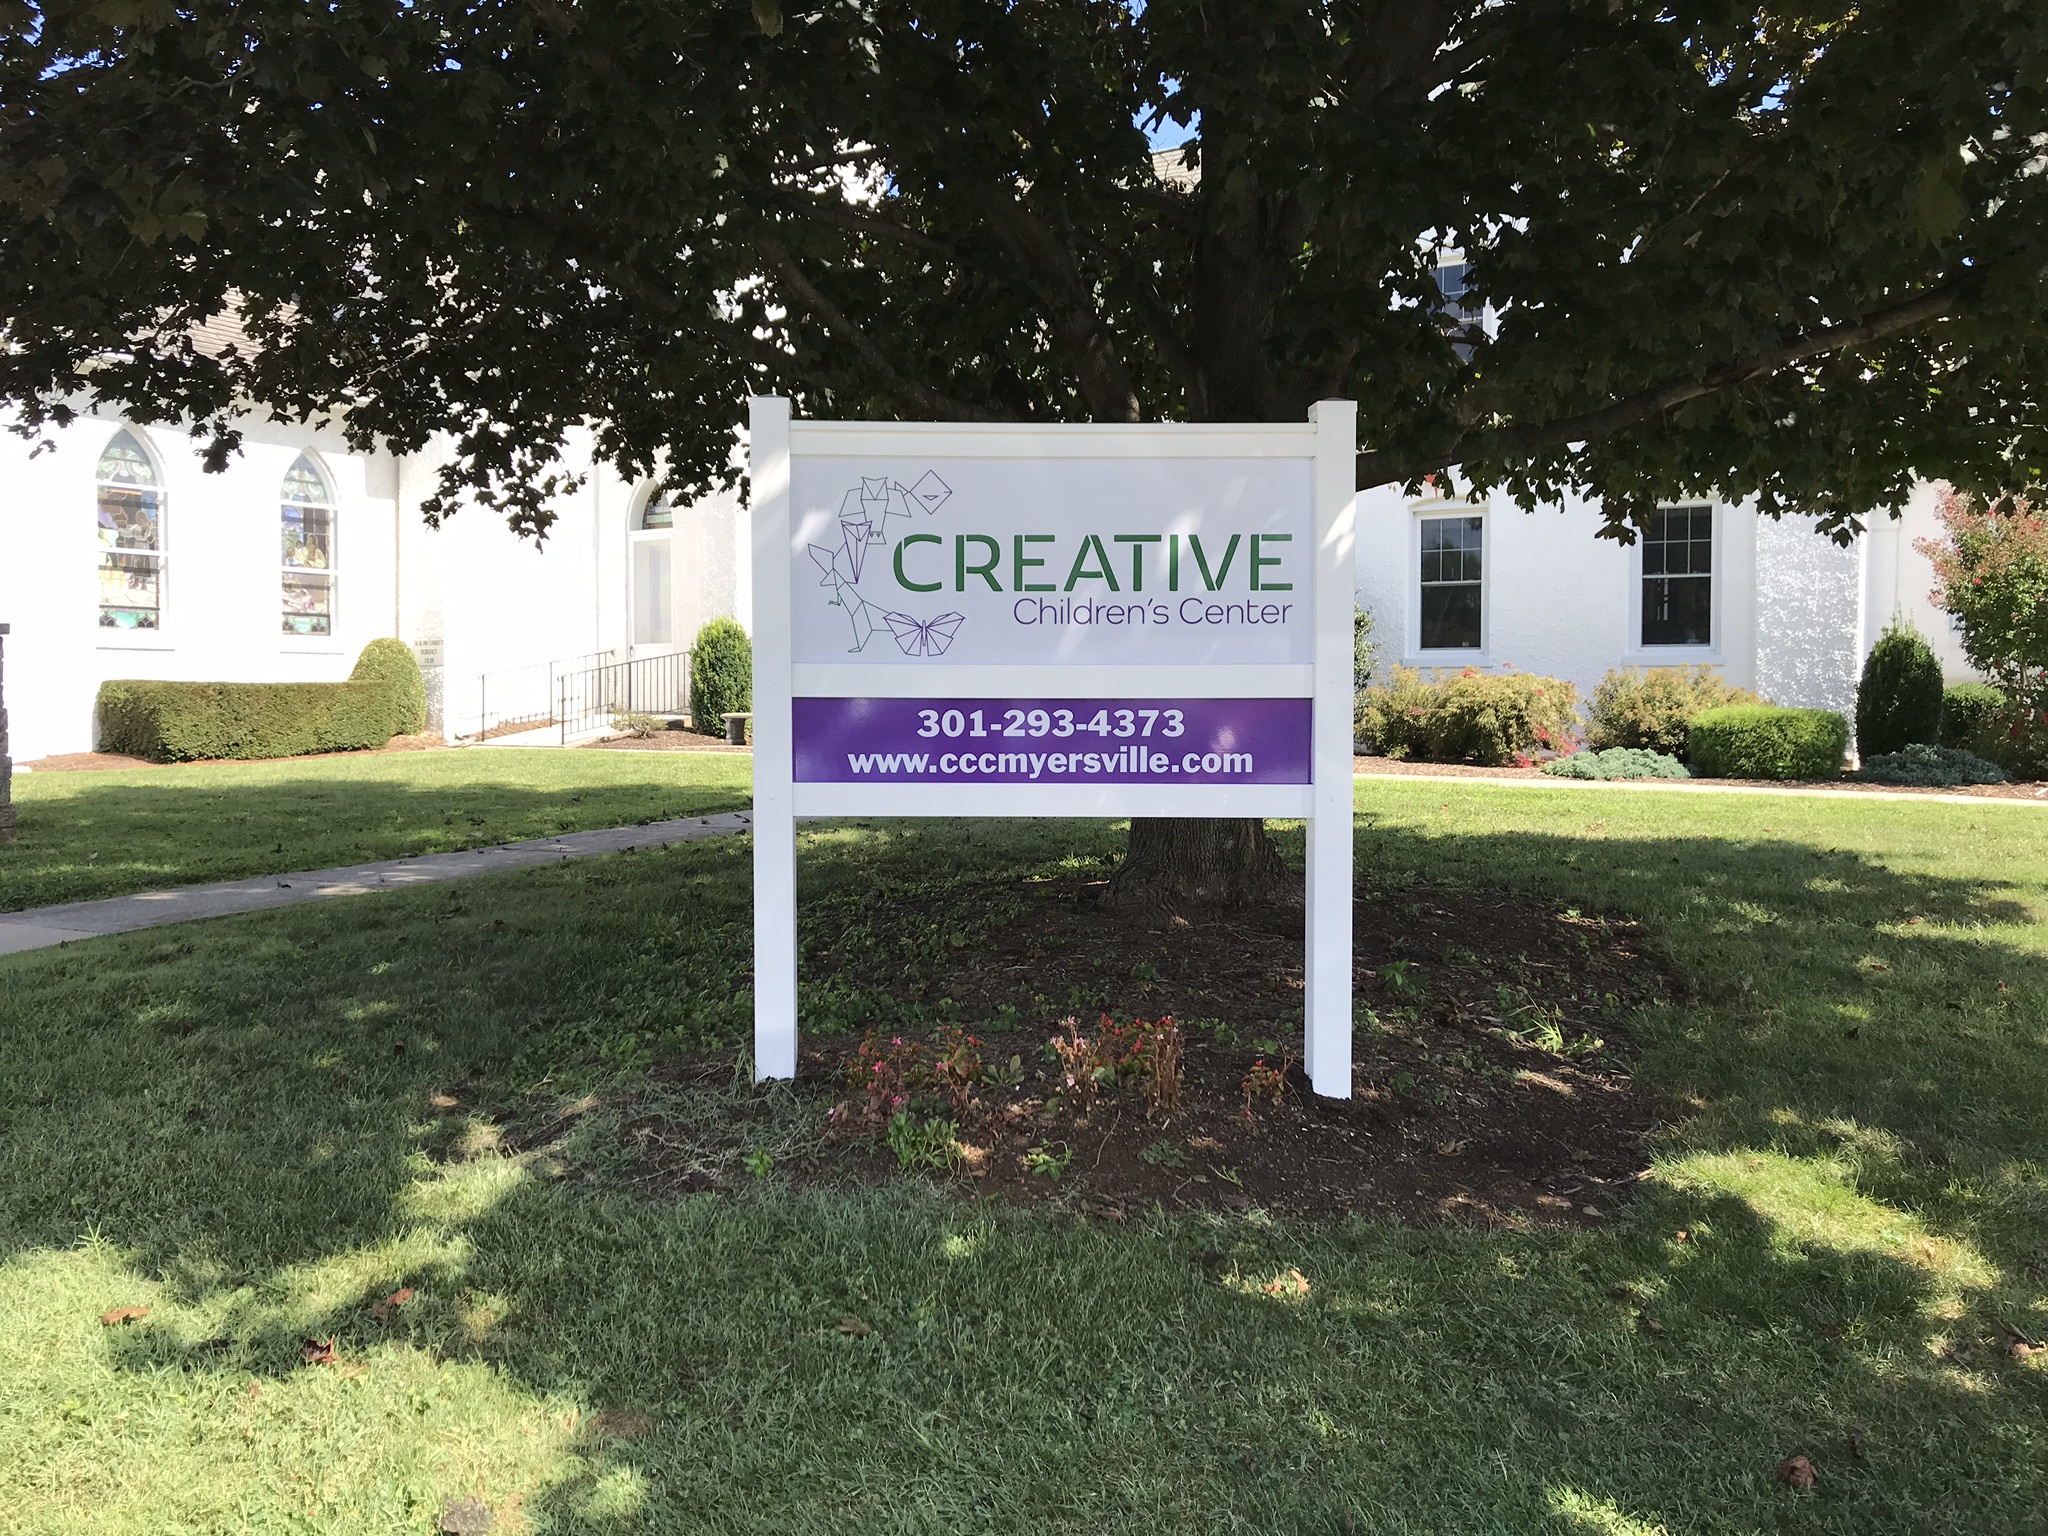 Creative Children's Center outdoor sign